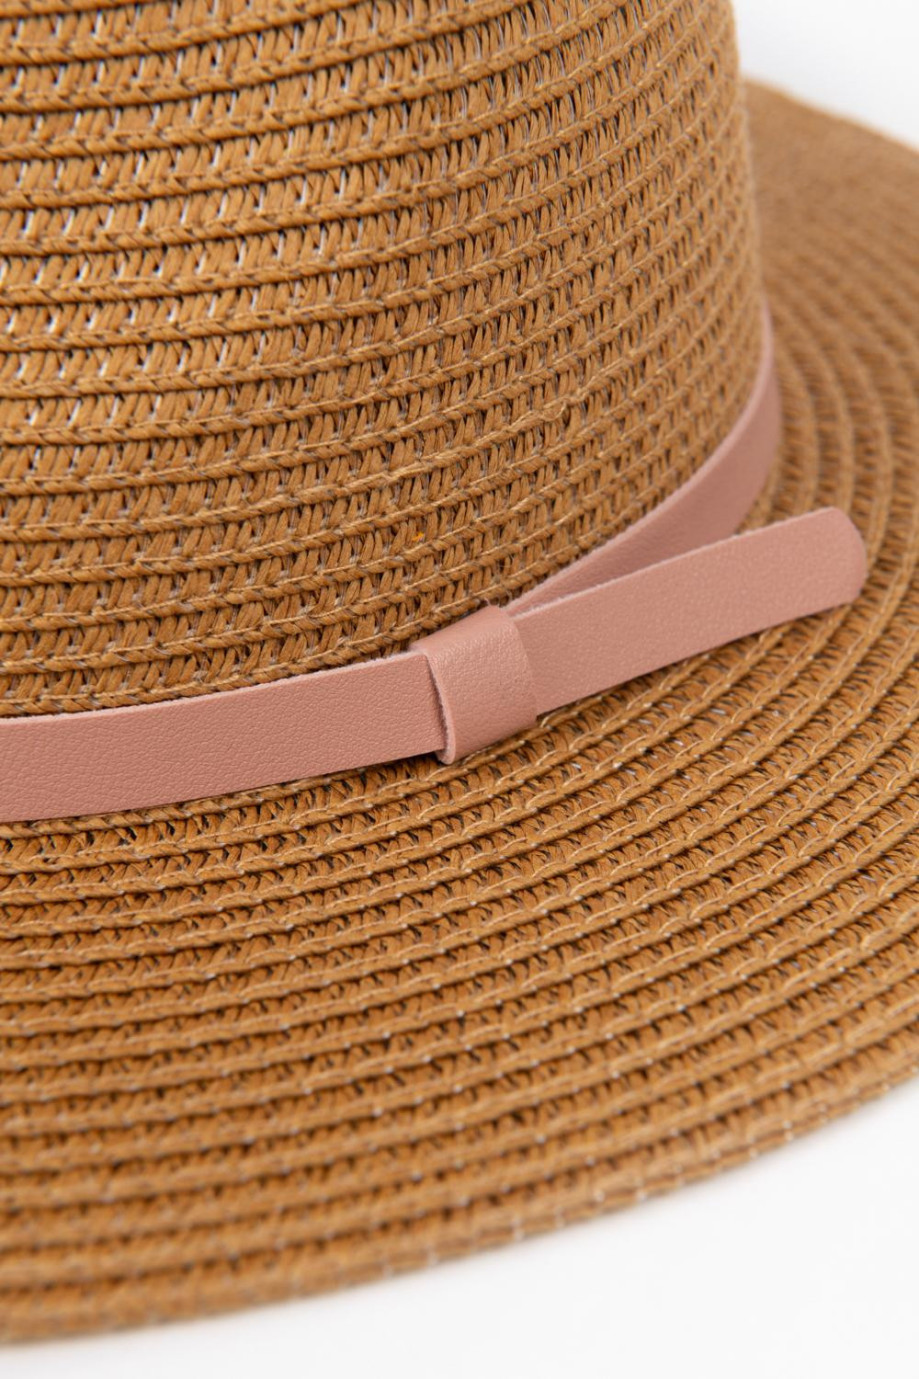 Sombrero de paja kaky oscuro con lazo rosado decorativo